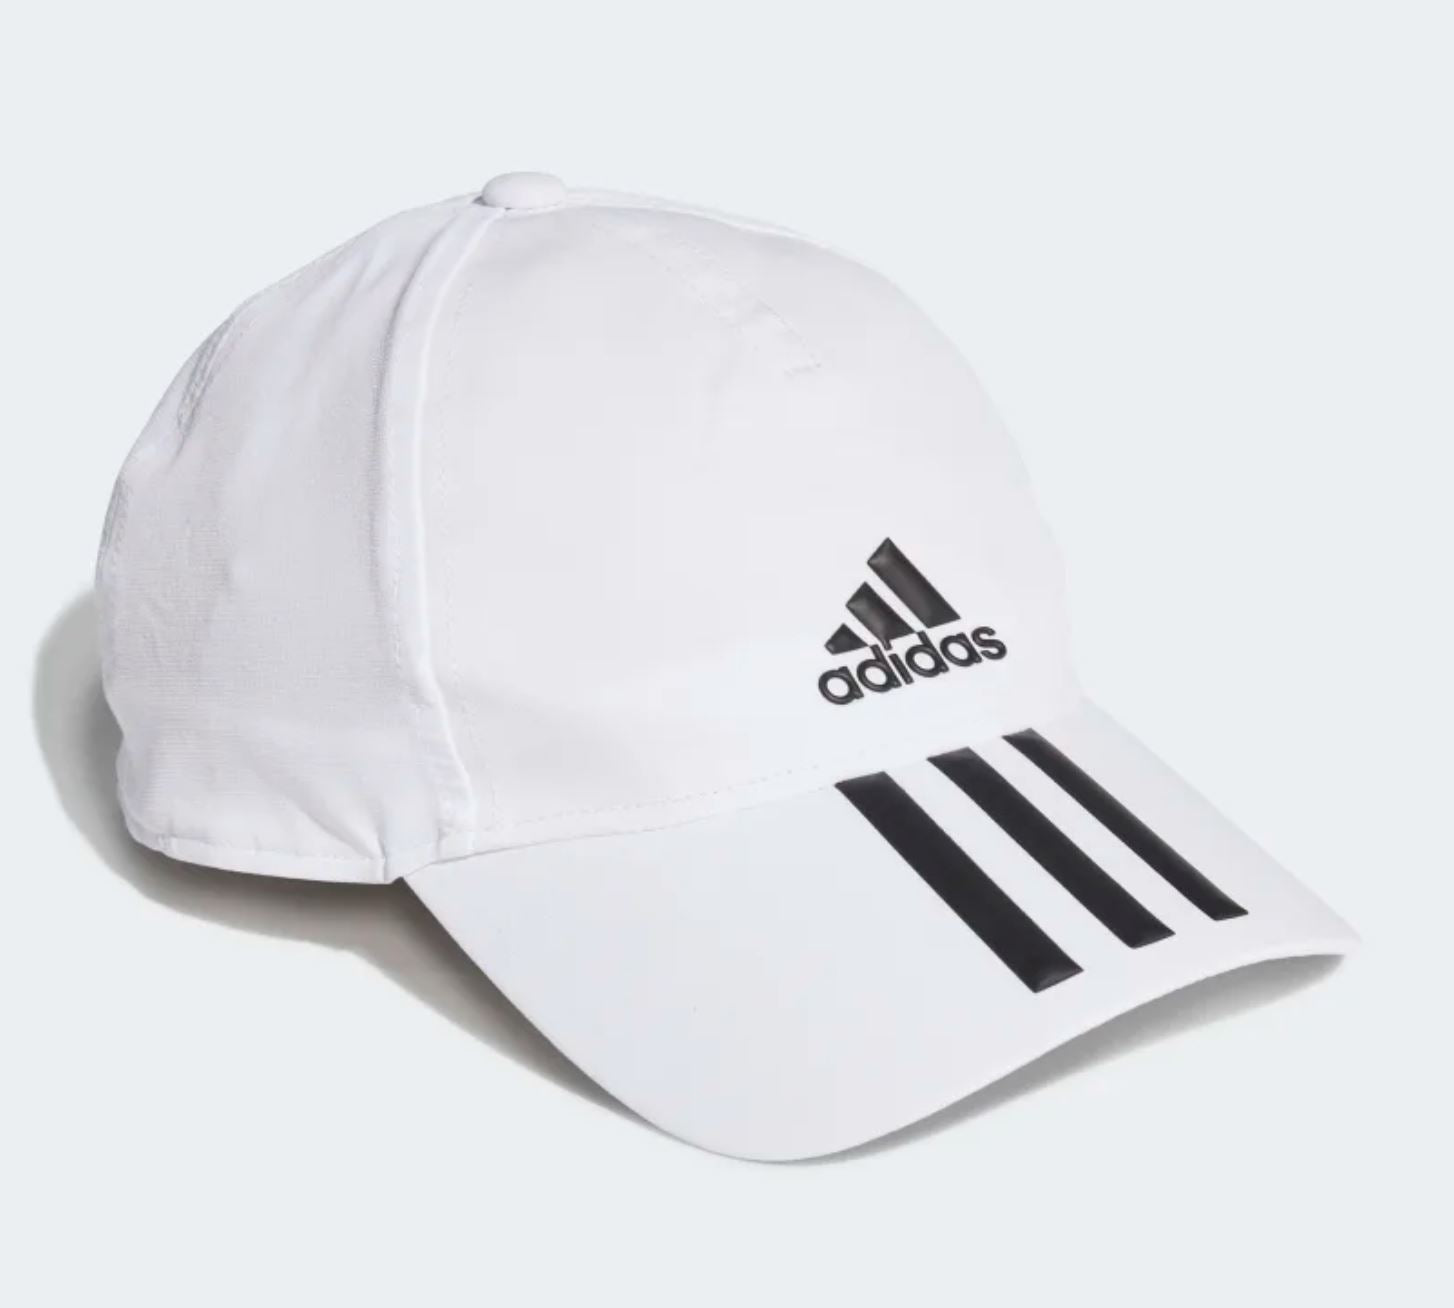 Adidas 3-Stripes Baseball Cap (White)